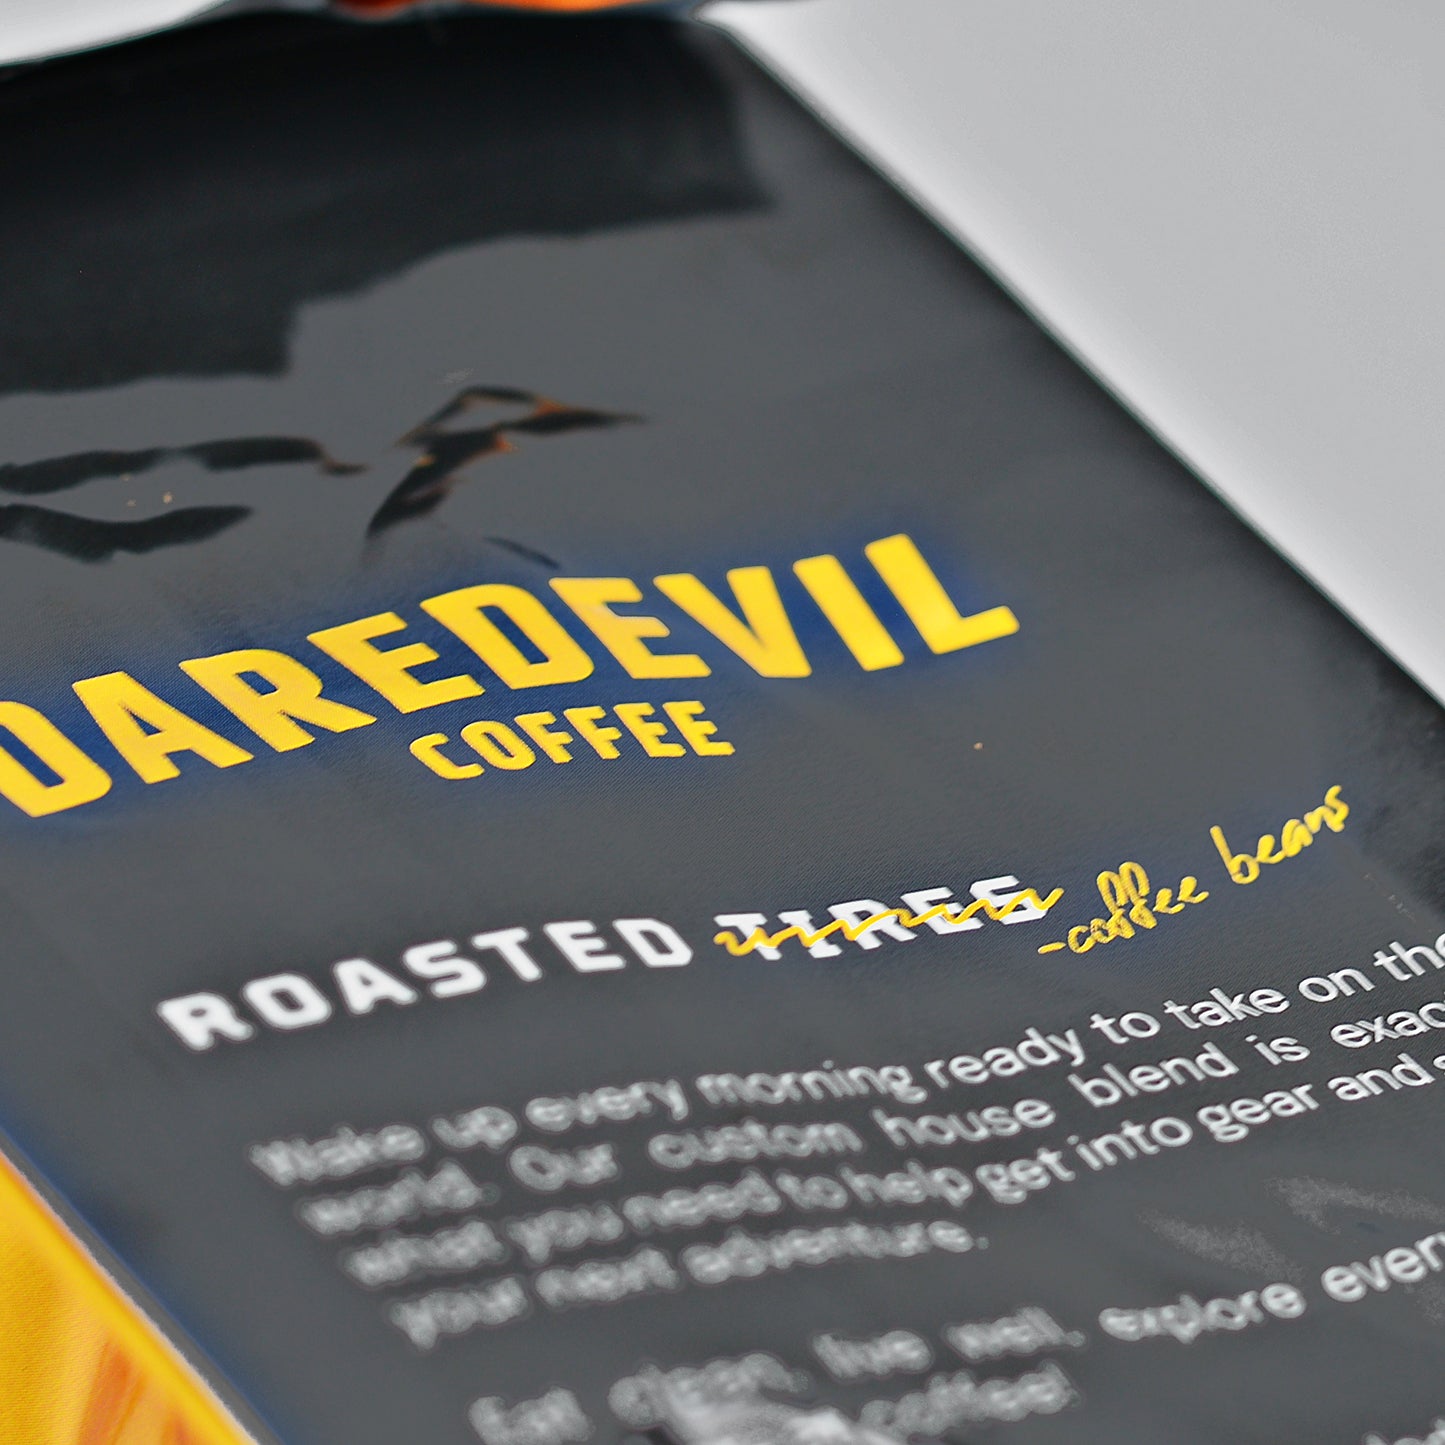 Daredevil Coffee - House Blend 12oz Bag